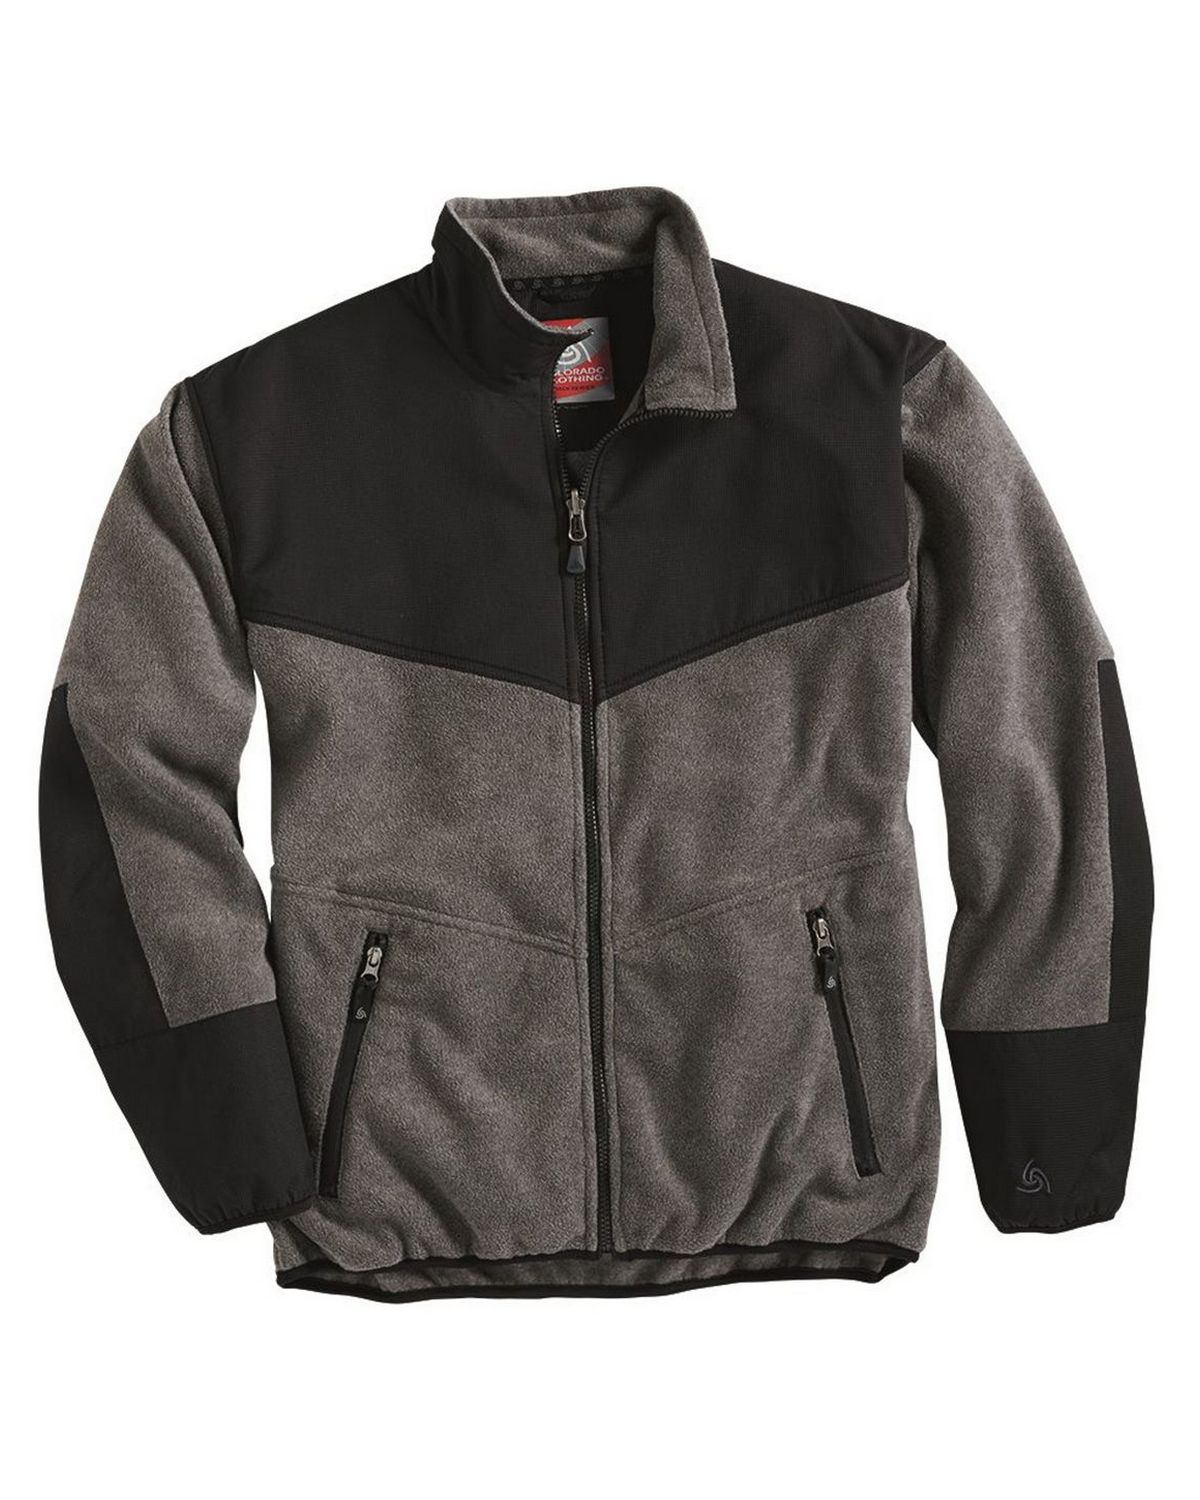 Colorado Clothing 13435I Mens 3-in-1 Systems Jacket Inner Fleece